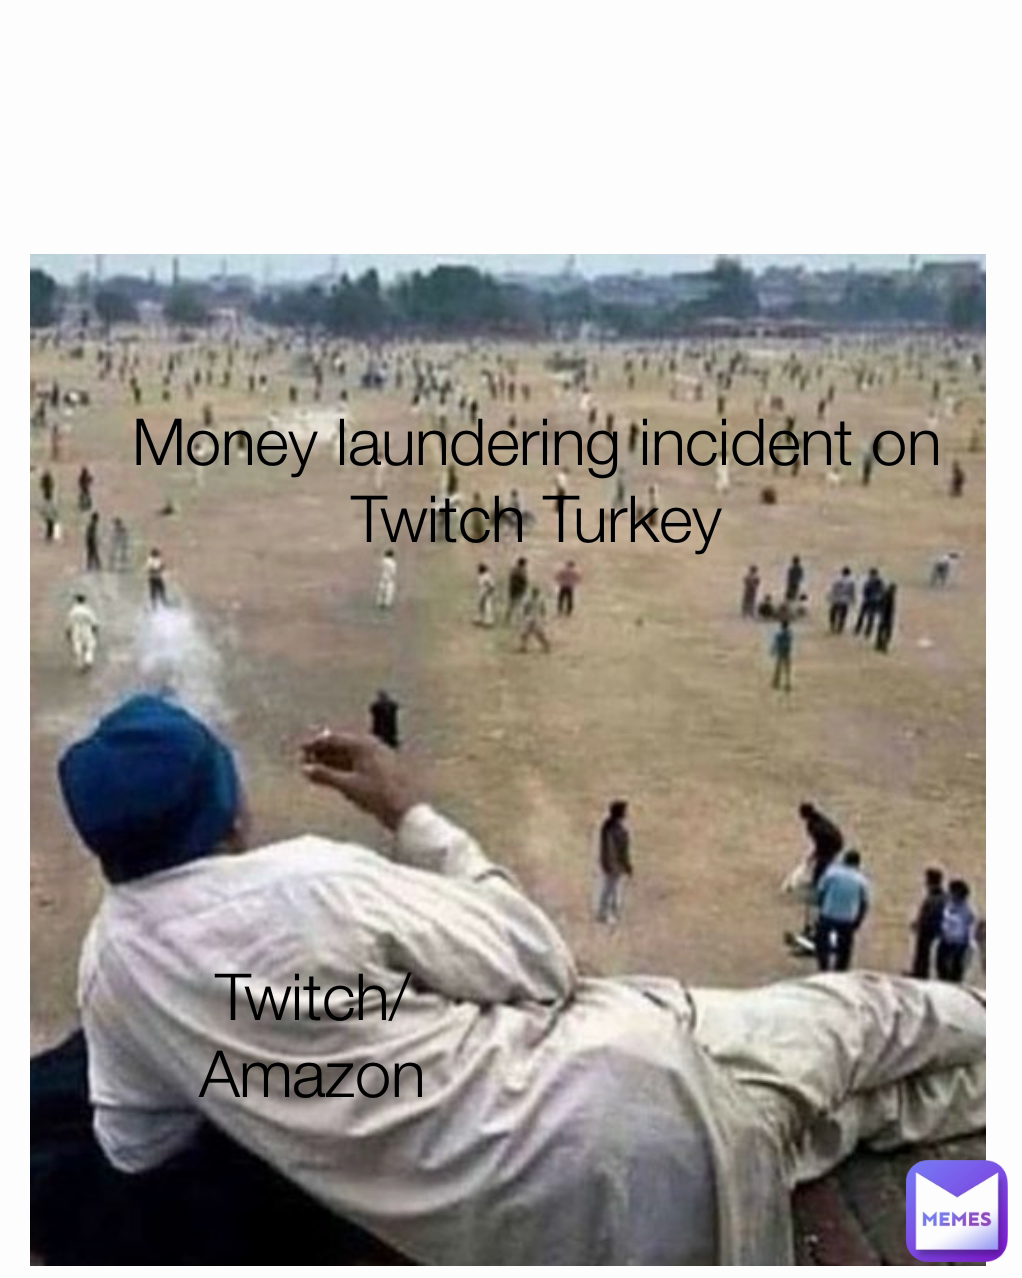 Twitch/Amazon Money laundering incident on Twitch Turkey